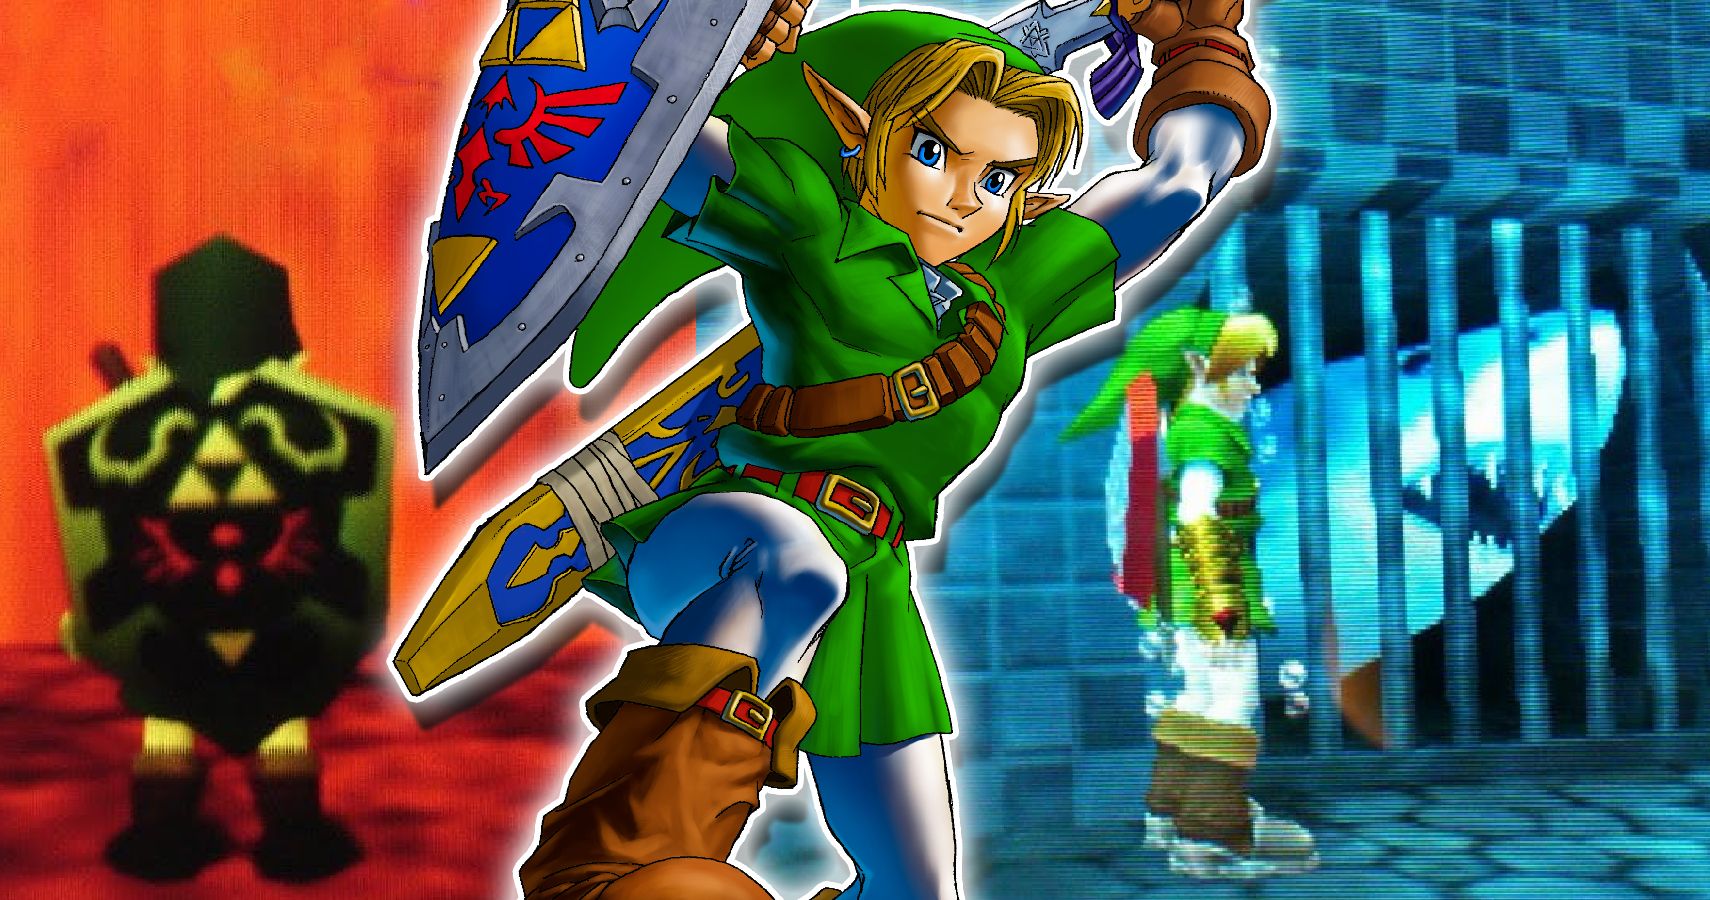 The Legend of Zelda: Ocarina of Time (w/ Master Quest) (Renewed)